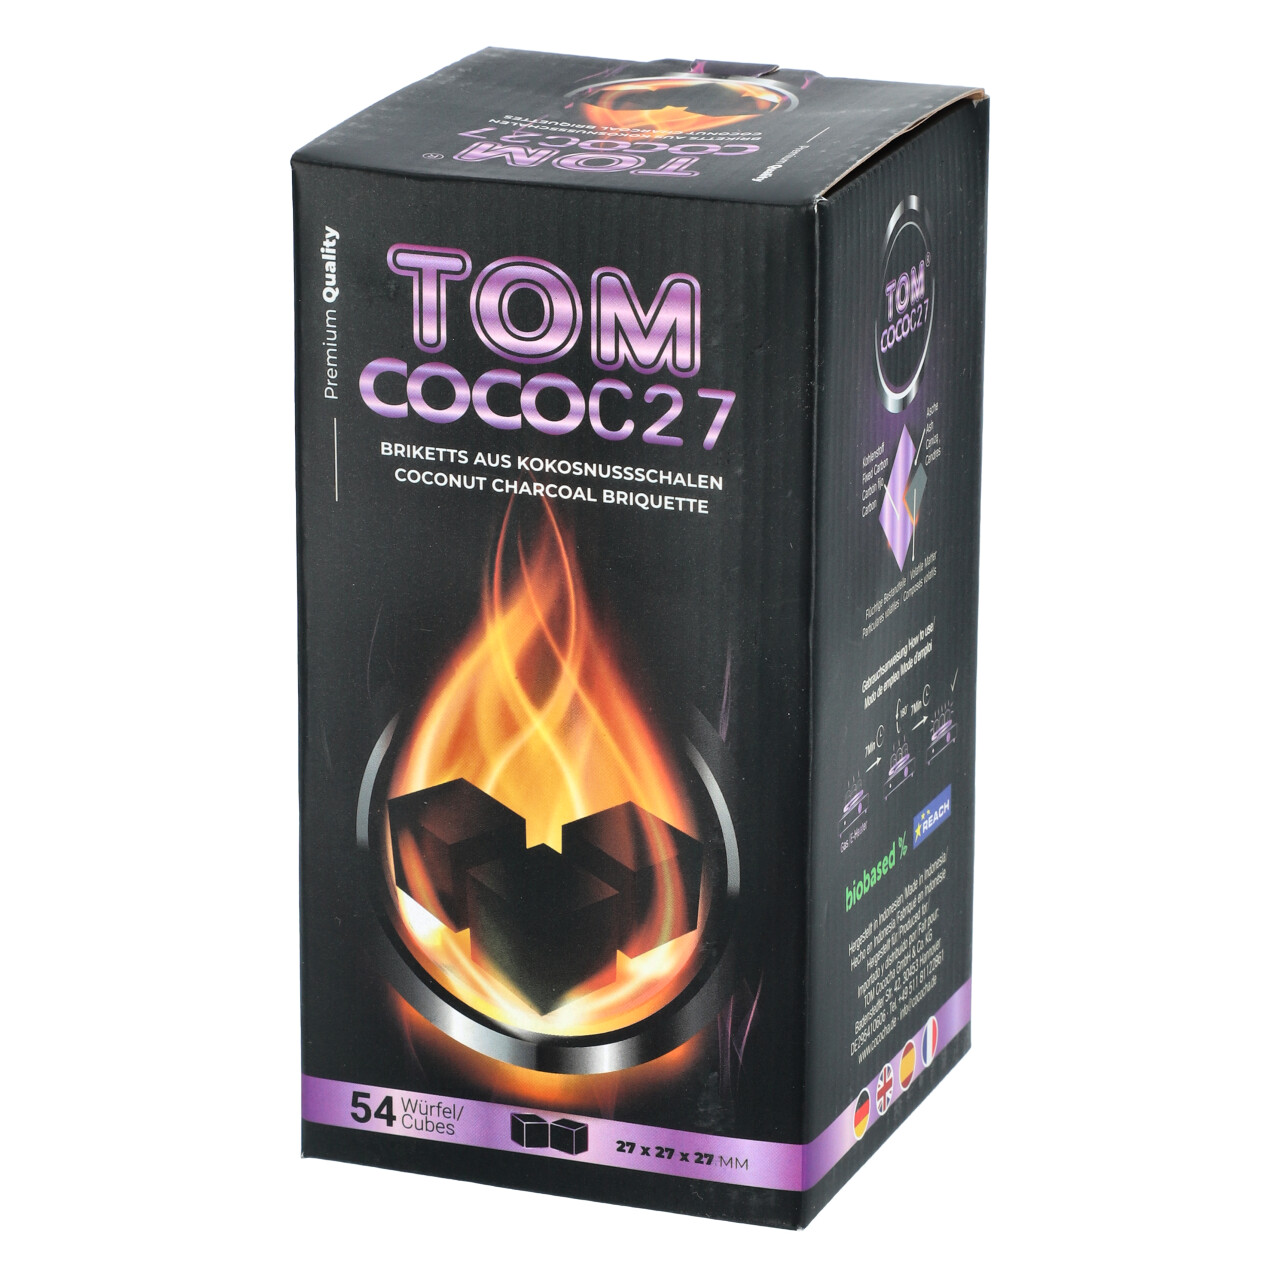 Tom Coco Gold C27 Kokoskohle, 1 kg